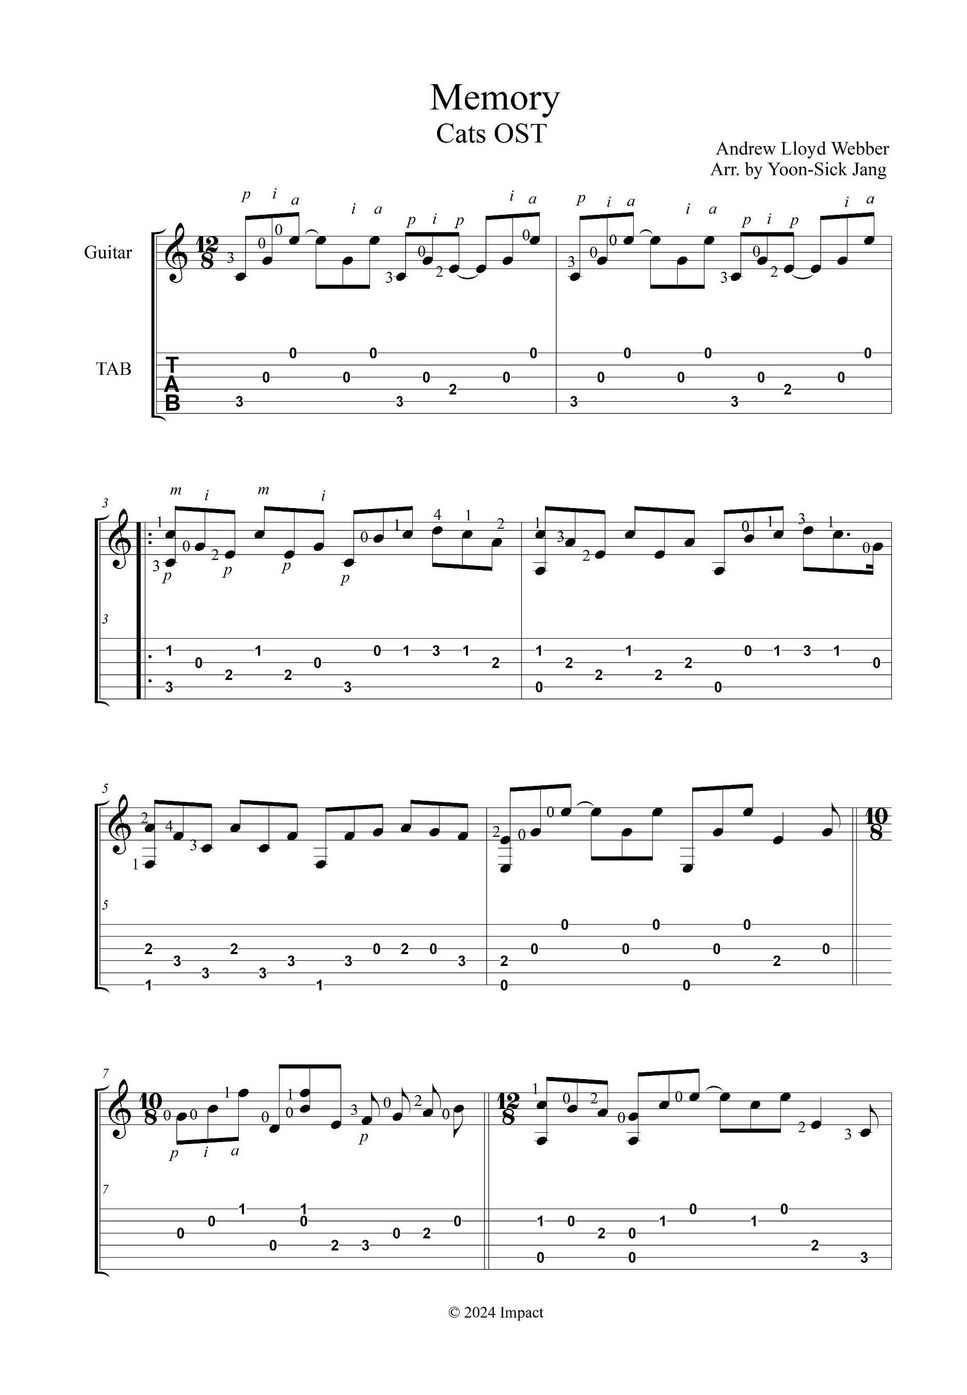 Andrew Lloyd Webber - 뮤지컬 캣츠(Cats) -Memory(쉬운 기타솔로) (타브악보, 오선악보 동시 수록) by 장윤식